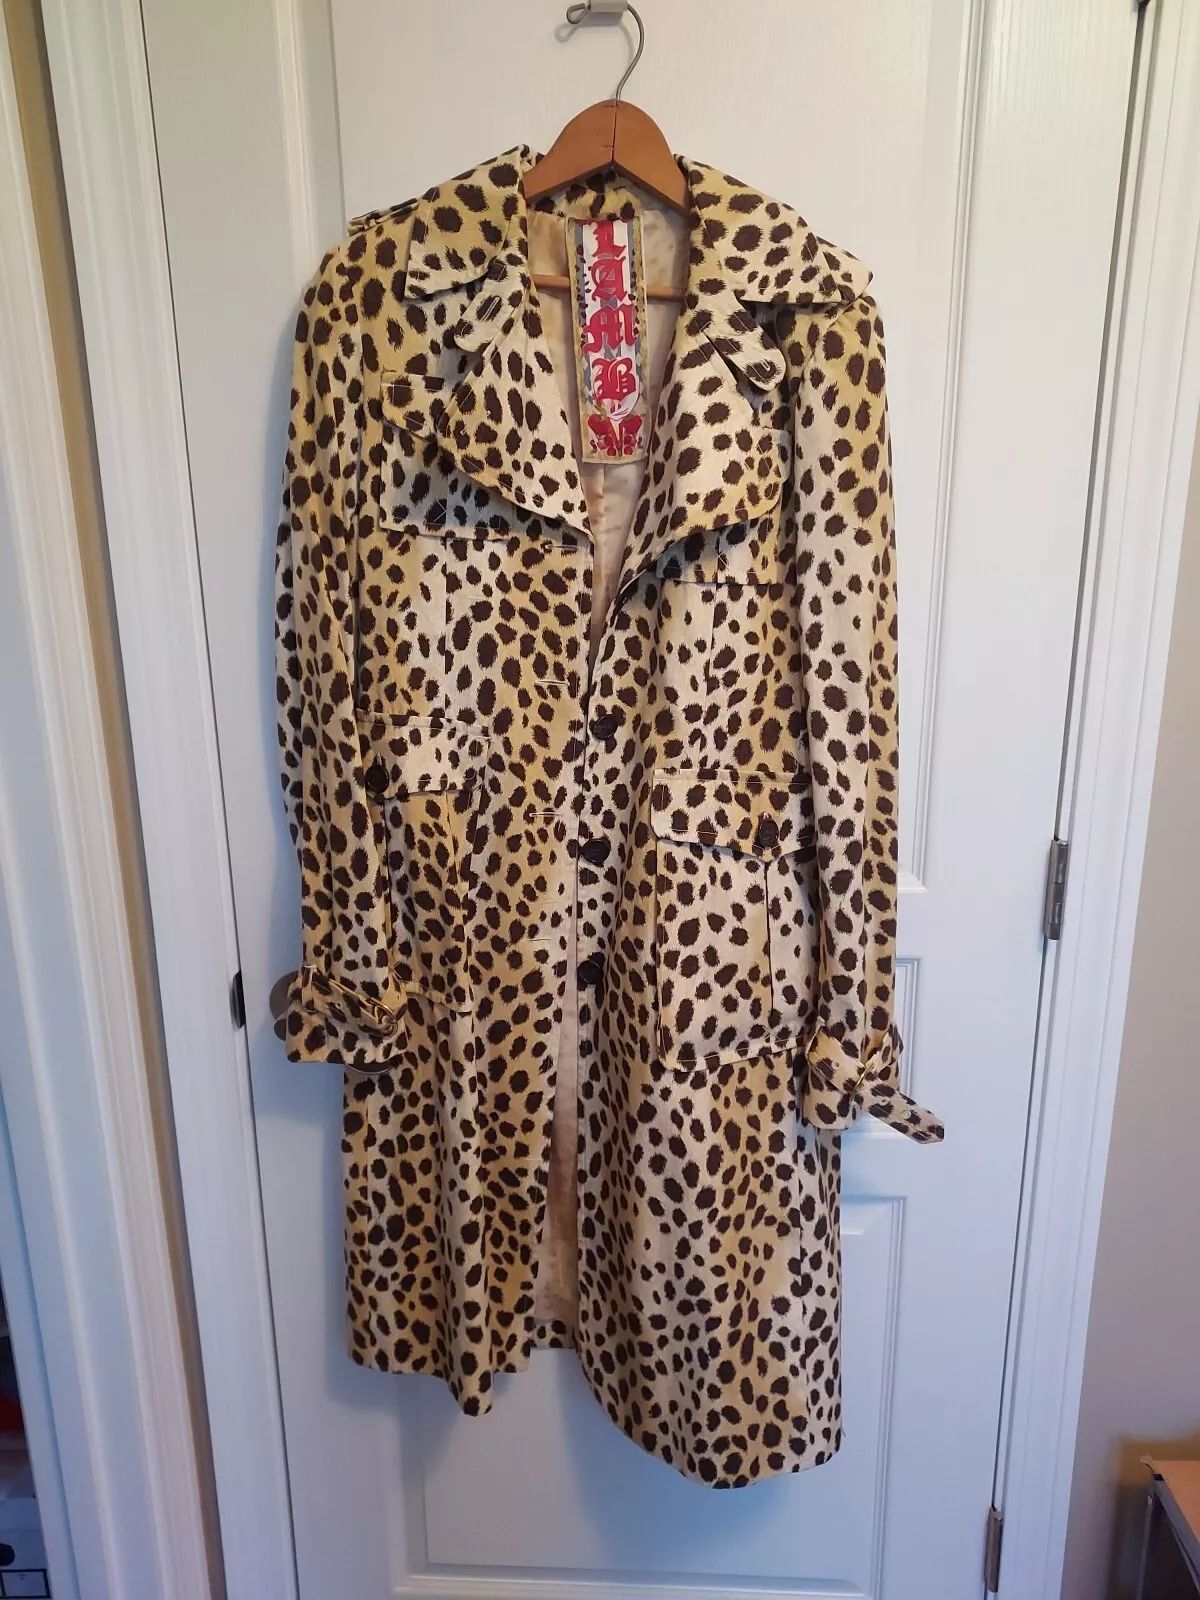 L.A.M.B. Gwen Stefani Leopard Trenchcoat Spring 2007 EUC Size 14 *Read* | eBay CA